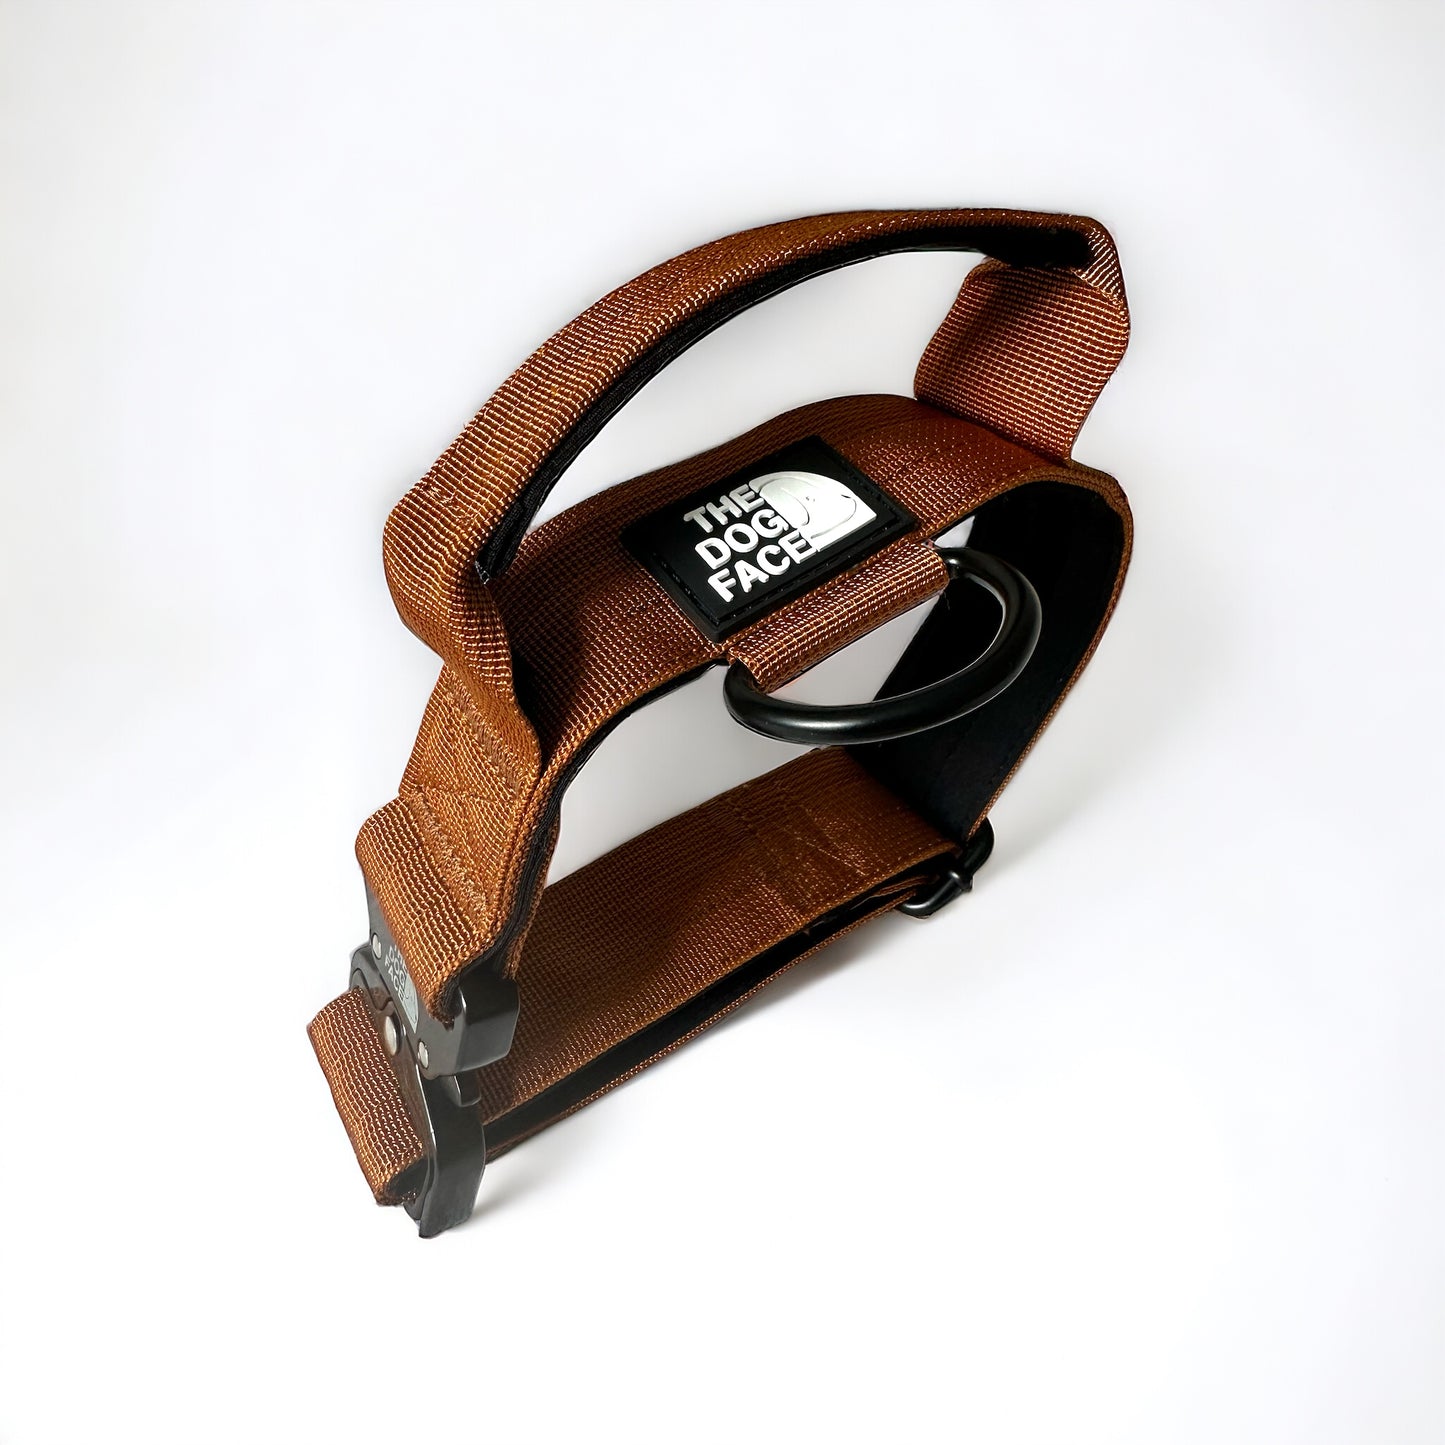 ‘Superior' Tactical Dog Collar - Brown